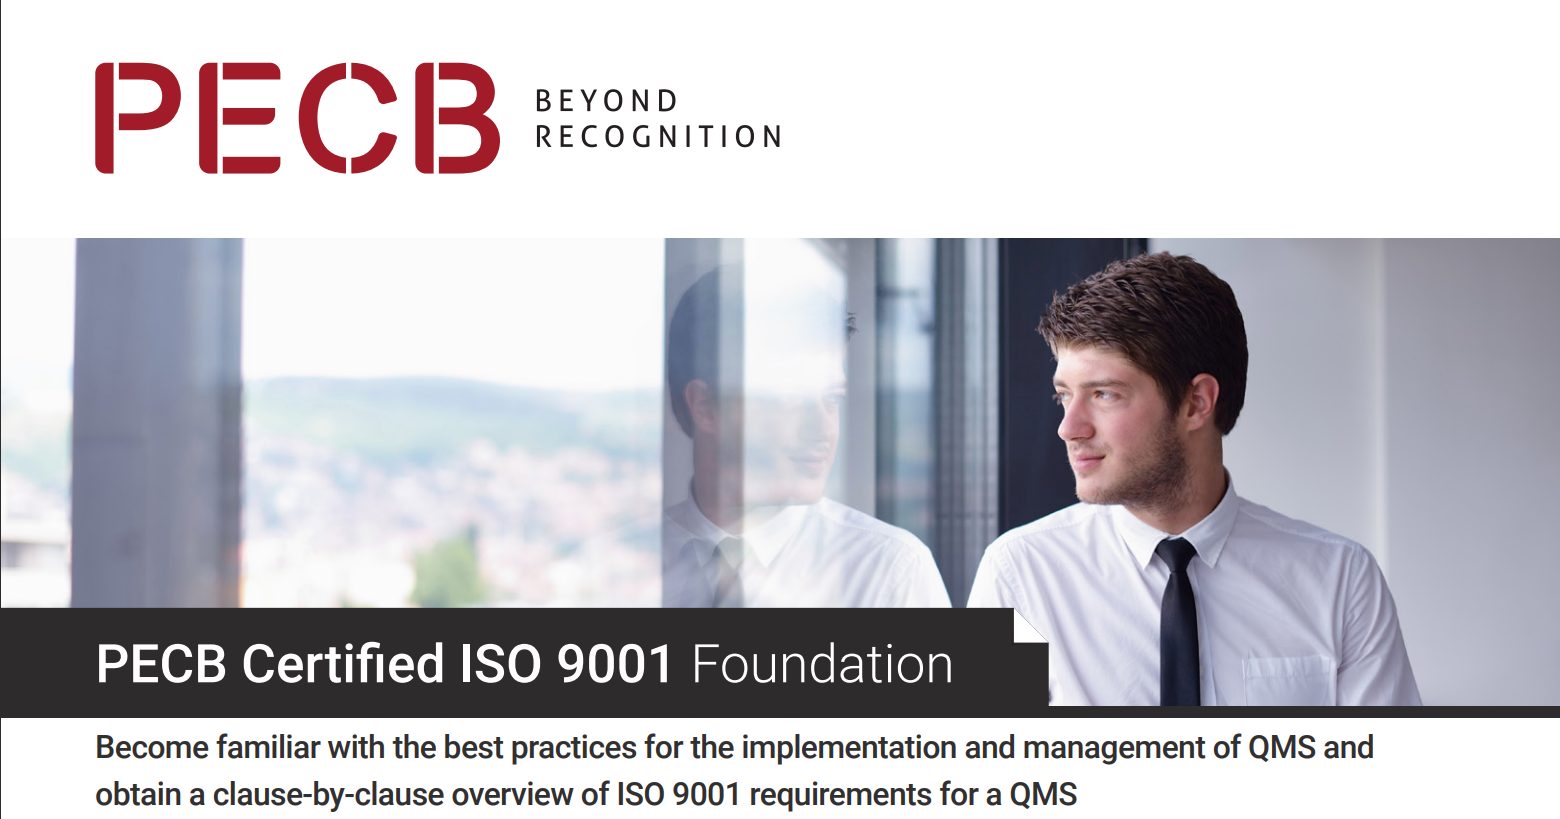 ISO 9001 Foundation (PECB)